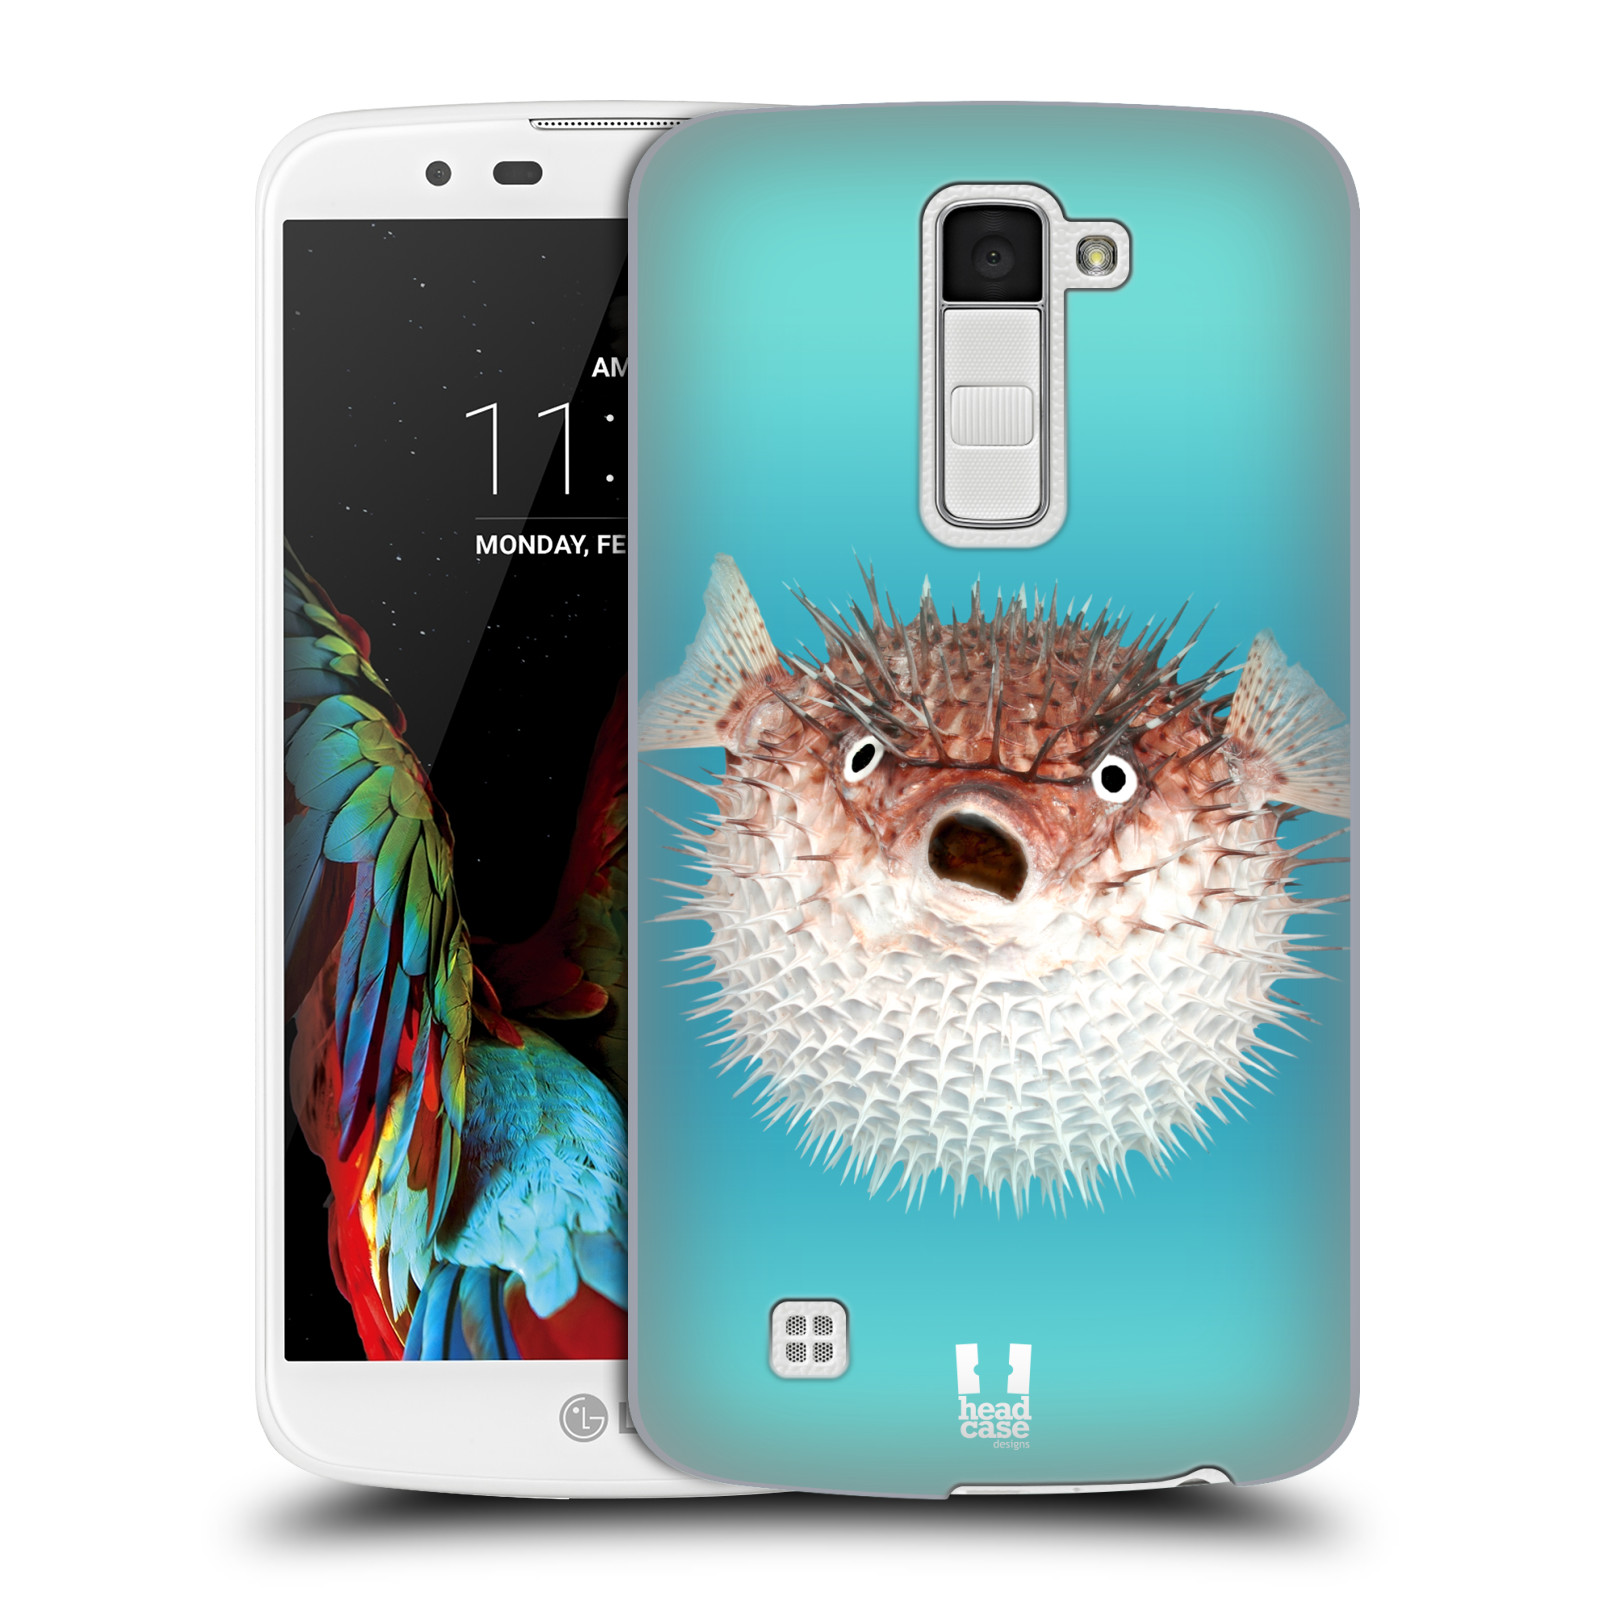 HEAD CASE plastový obal na mobil LG K10 vzor slavná zvířata foto ježík hnědý